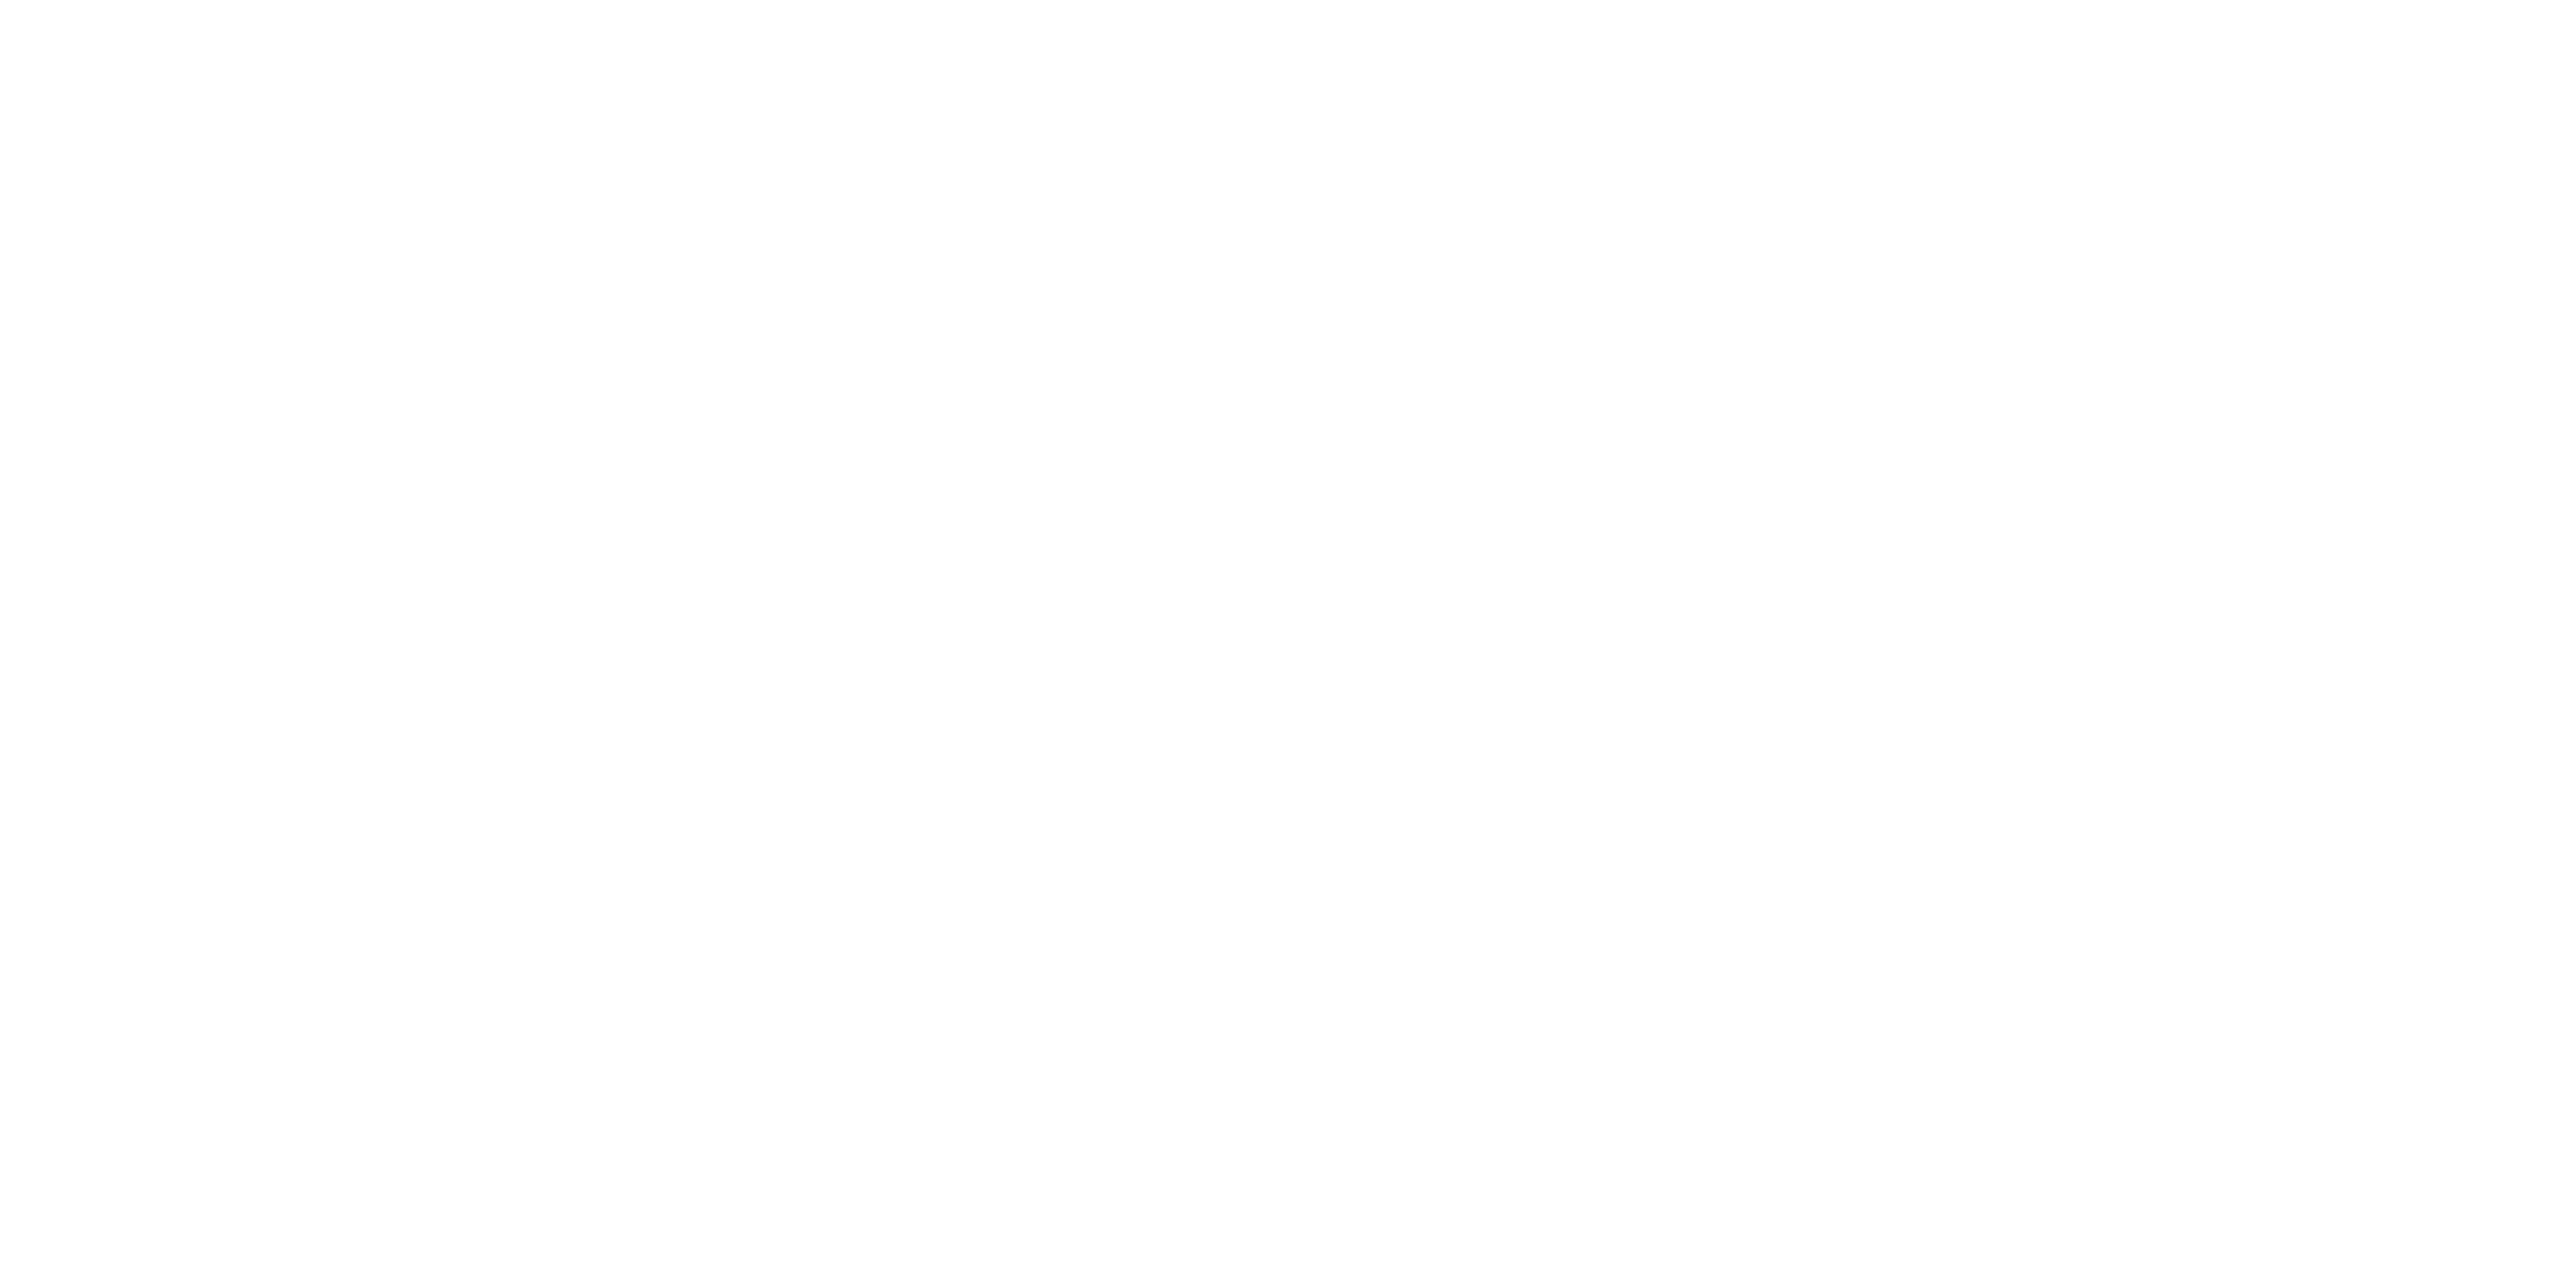 ANVI Law Firm